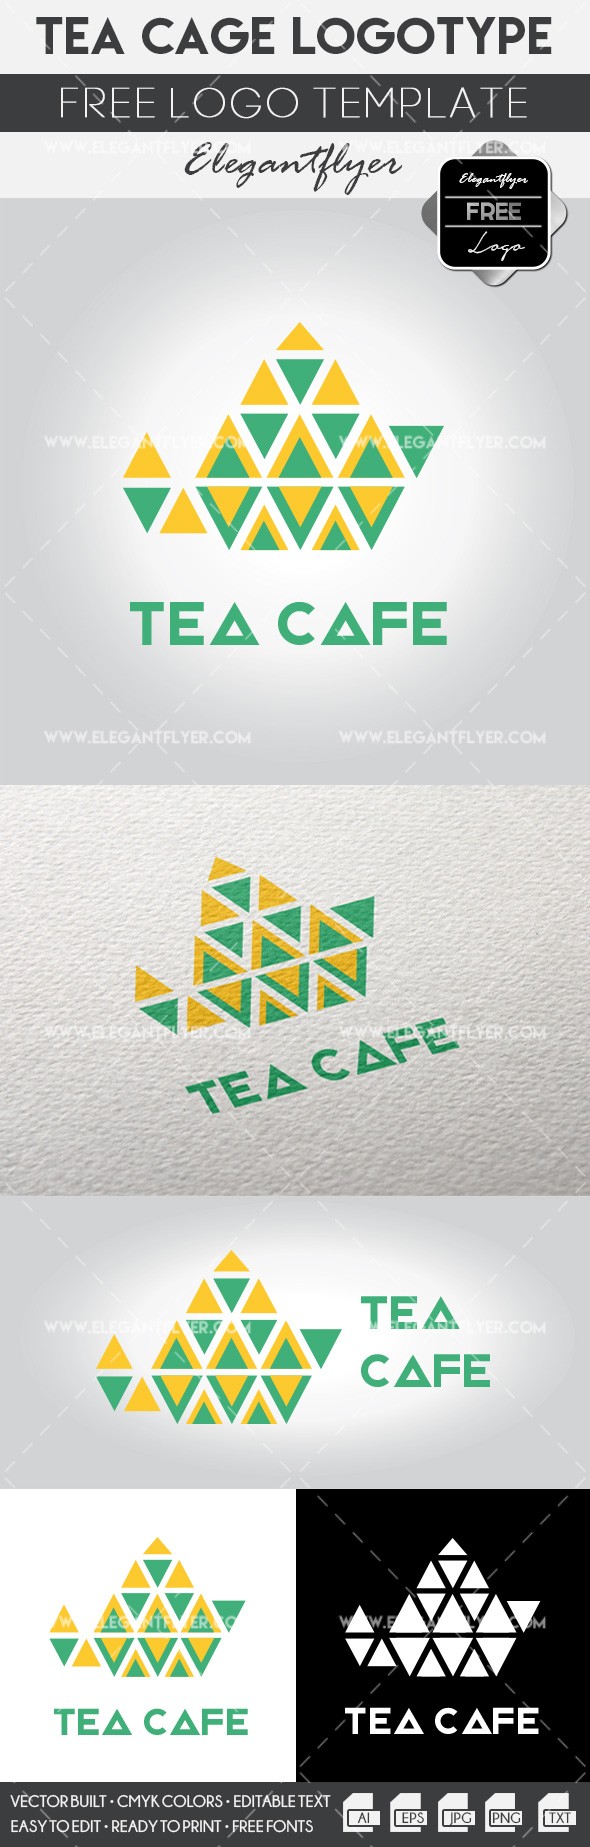 Caffetteria del tè by ElegantFlyer